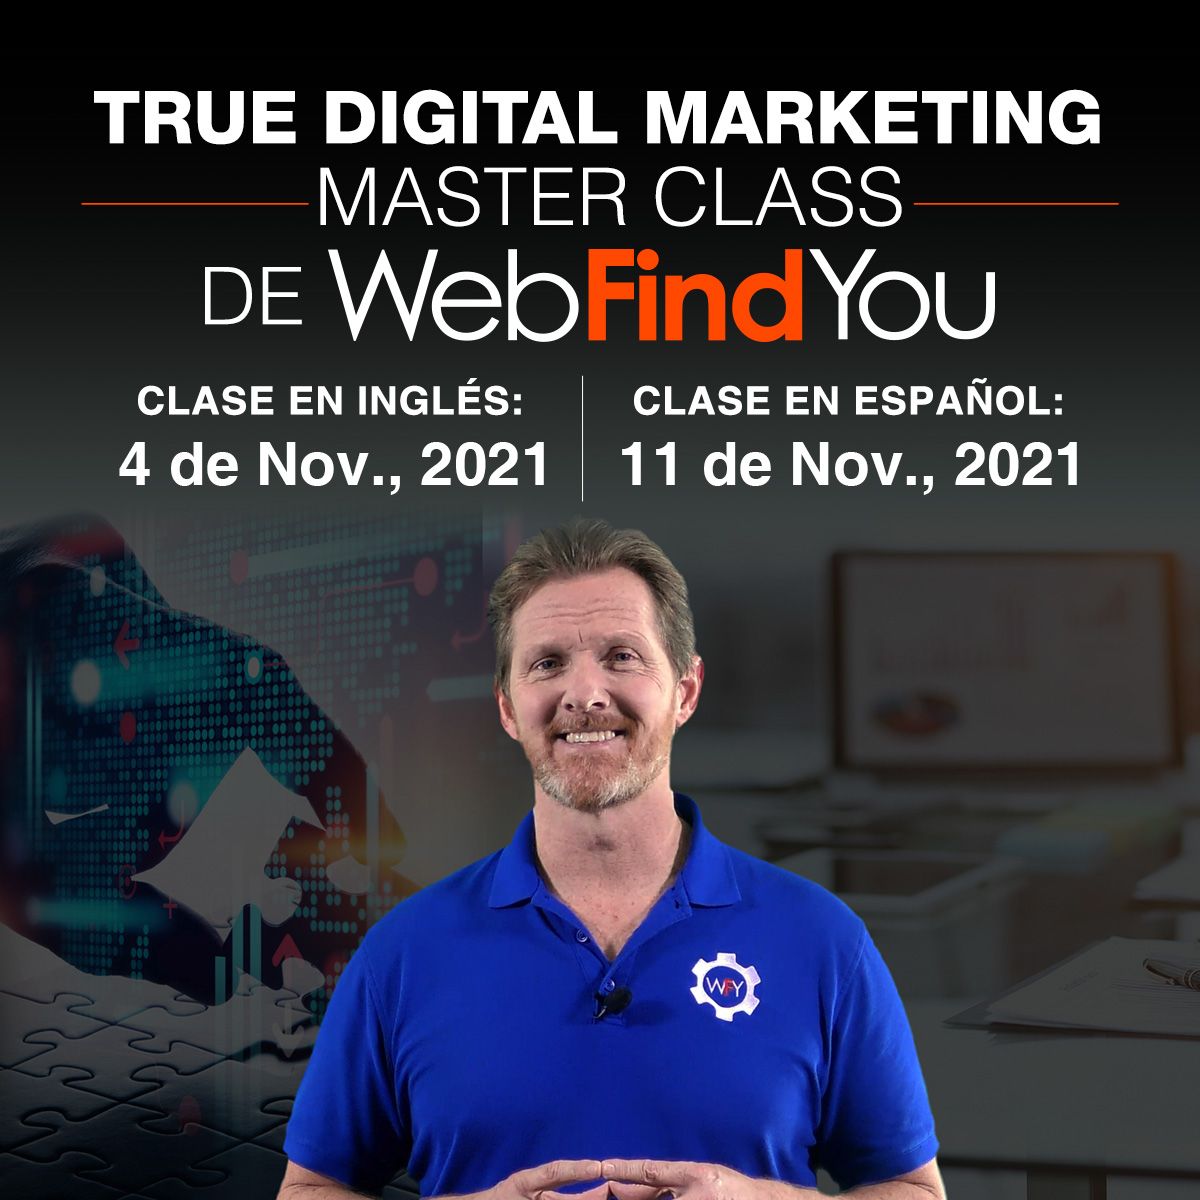 True Digital Marketing Master Class de WebFindYou